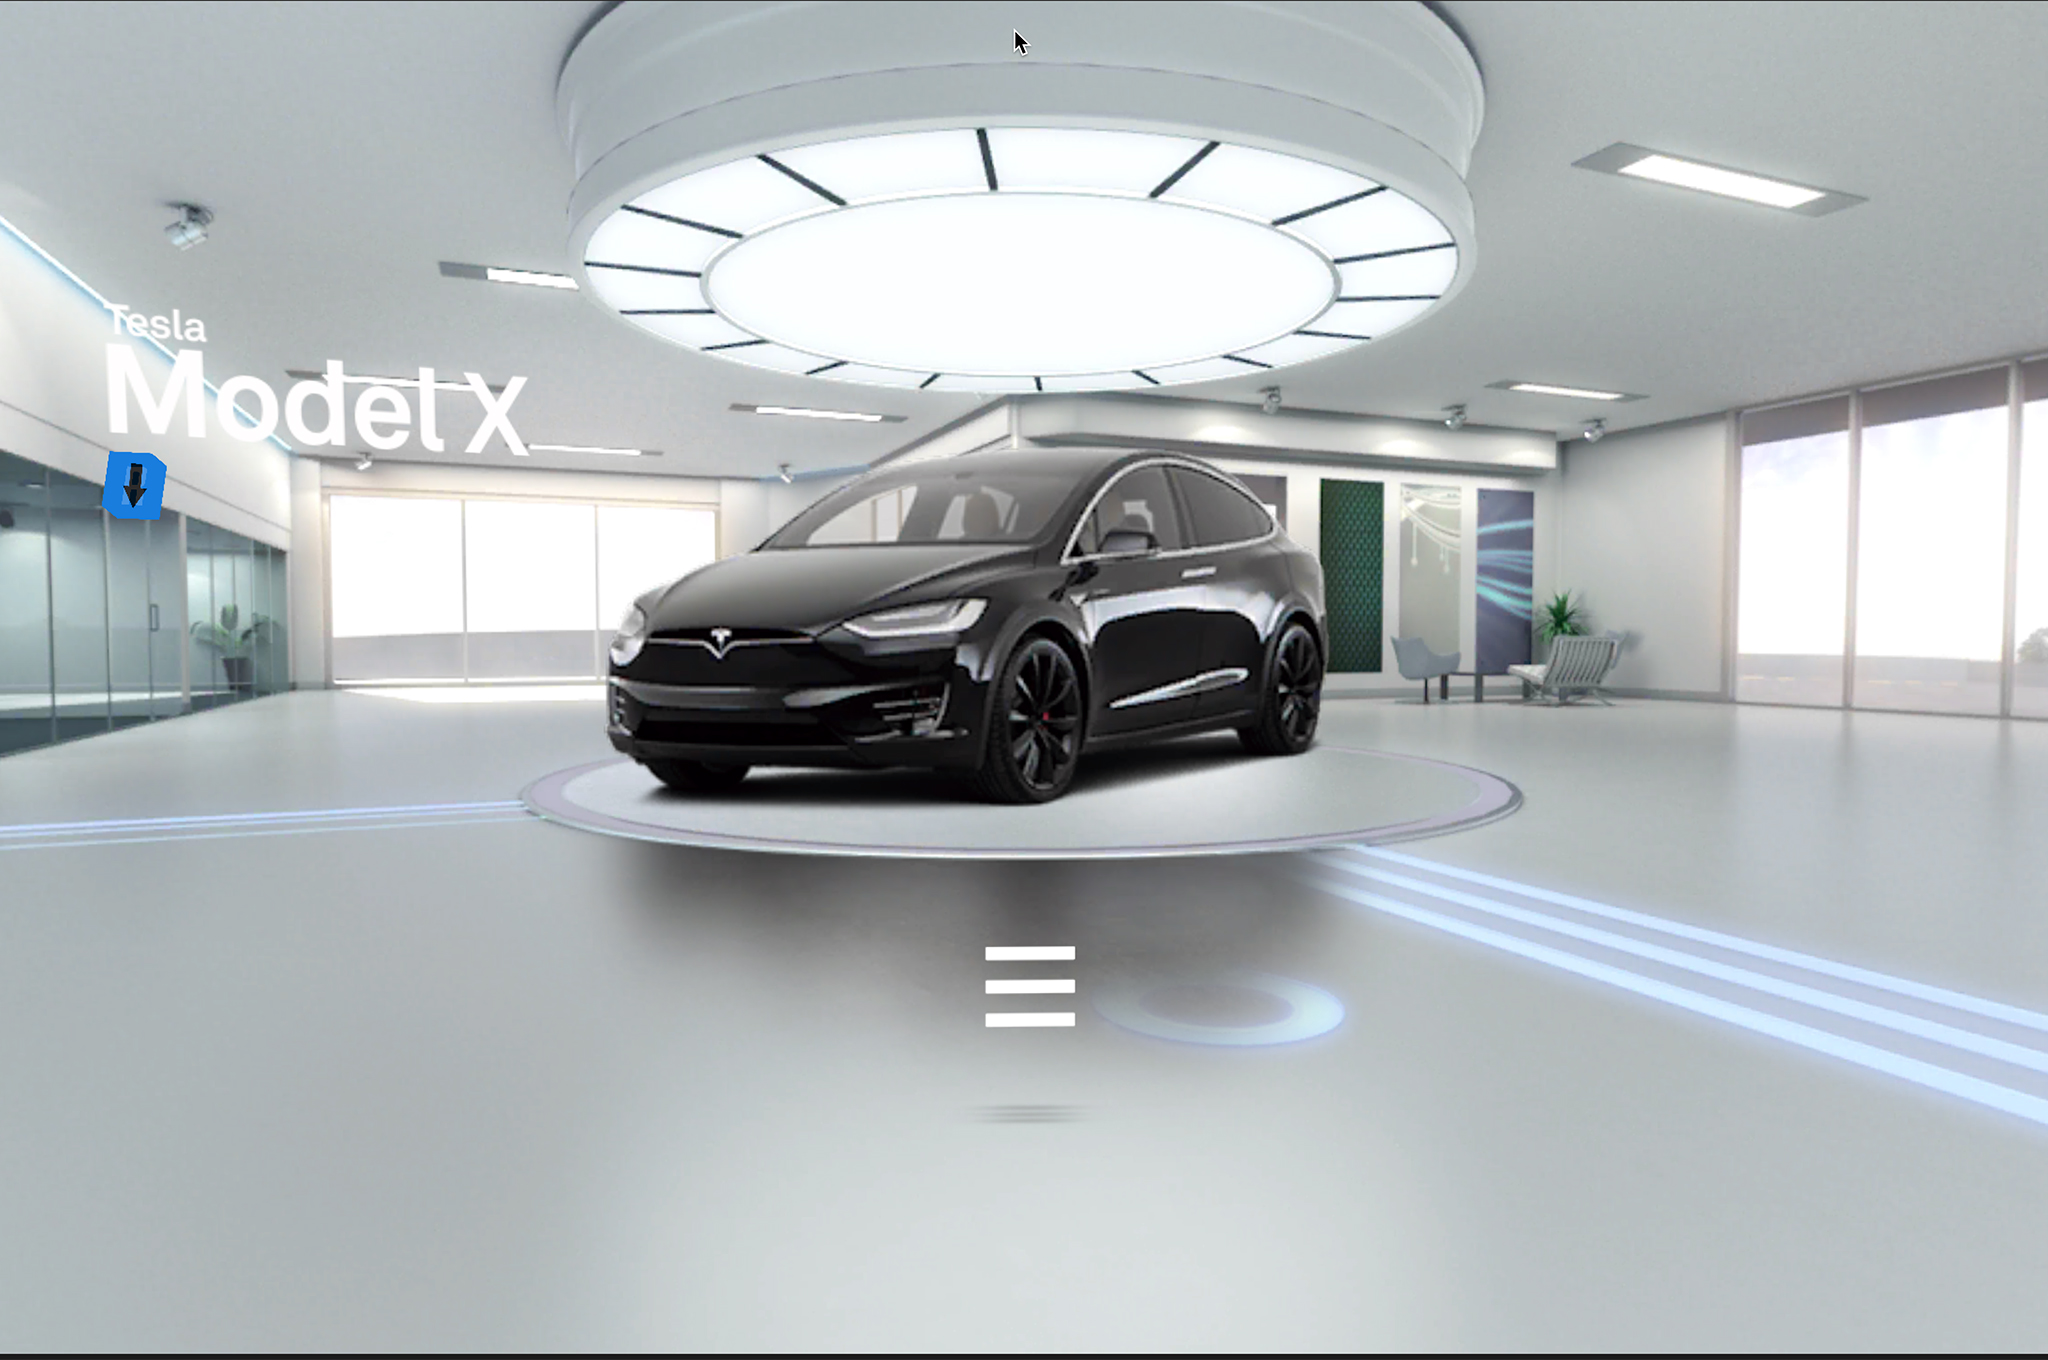 EVOX images virtual reality Tesla Model X showroom